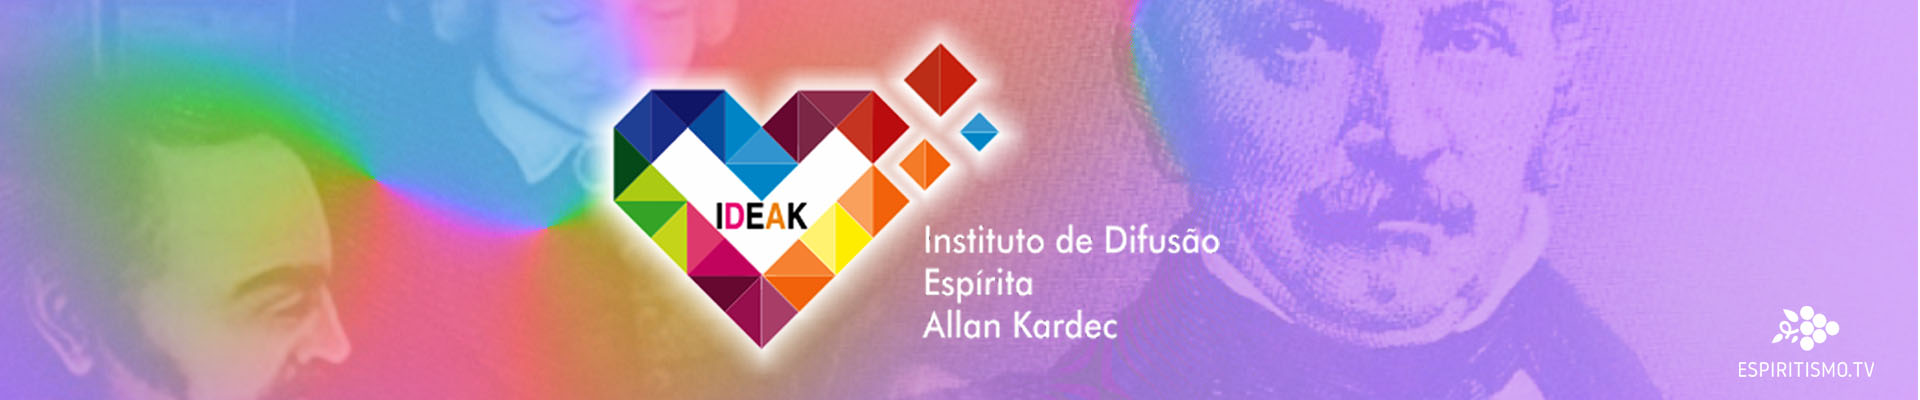 IDEAK - Instituto de Difusão Espírita Allan Kardec 1